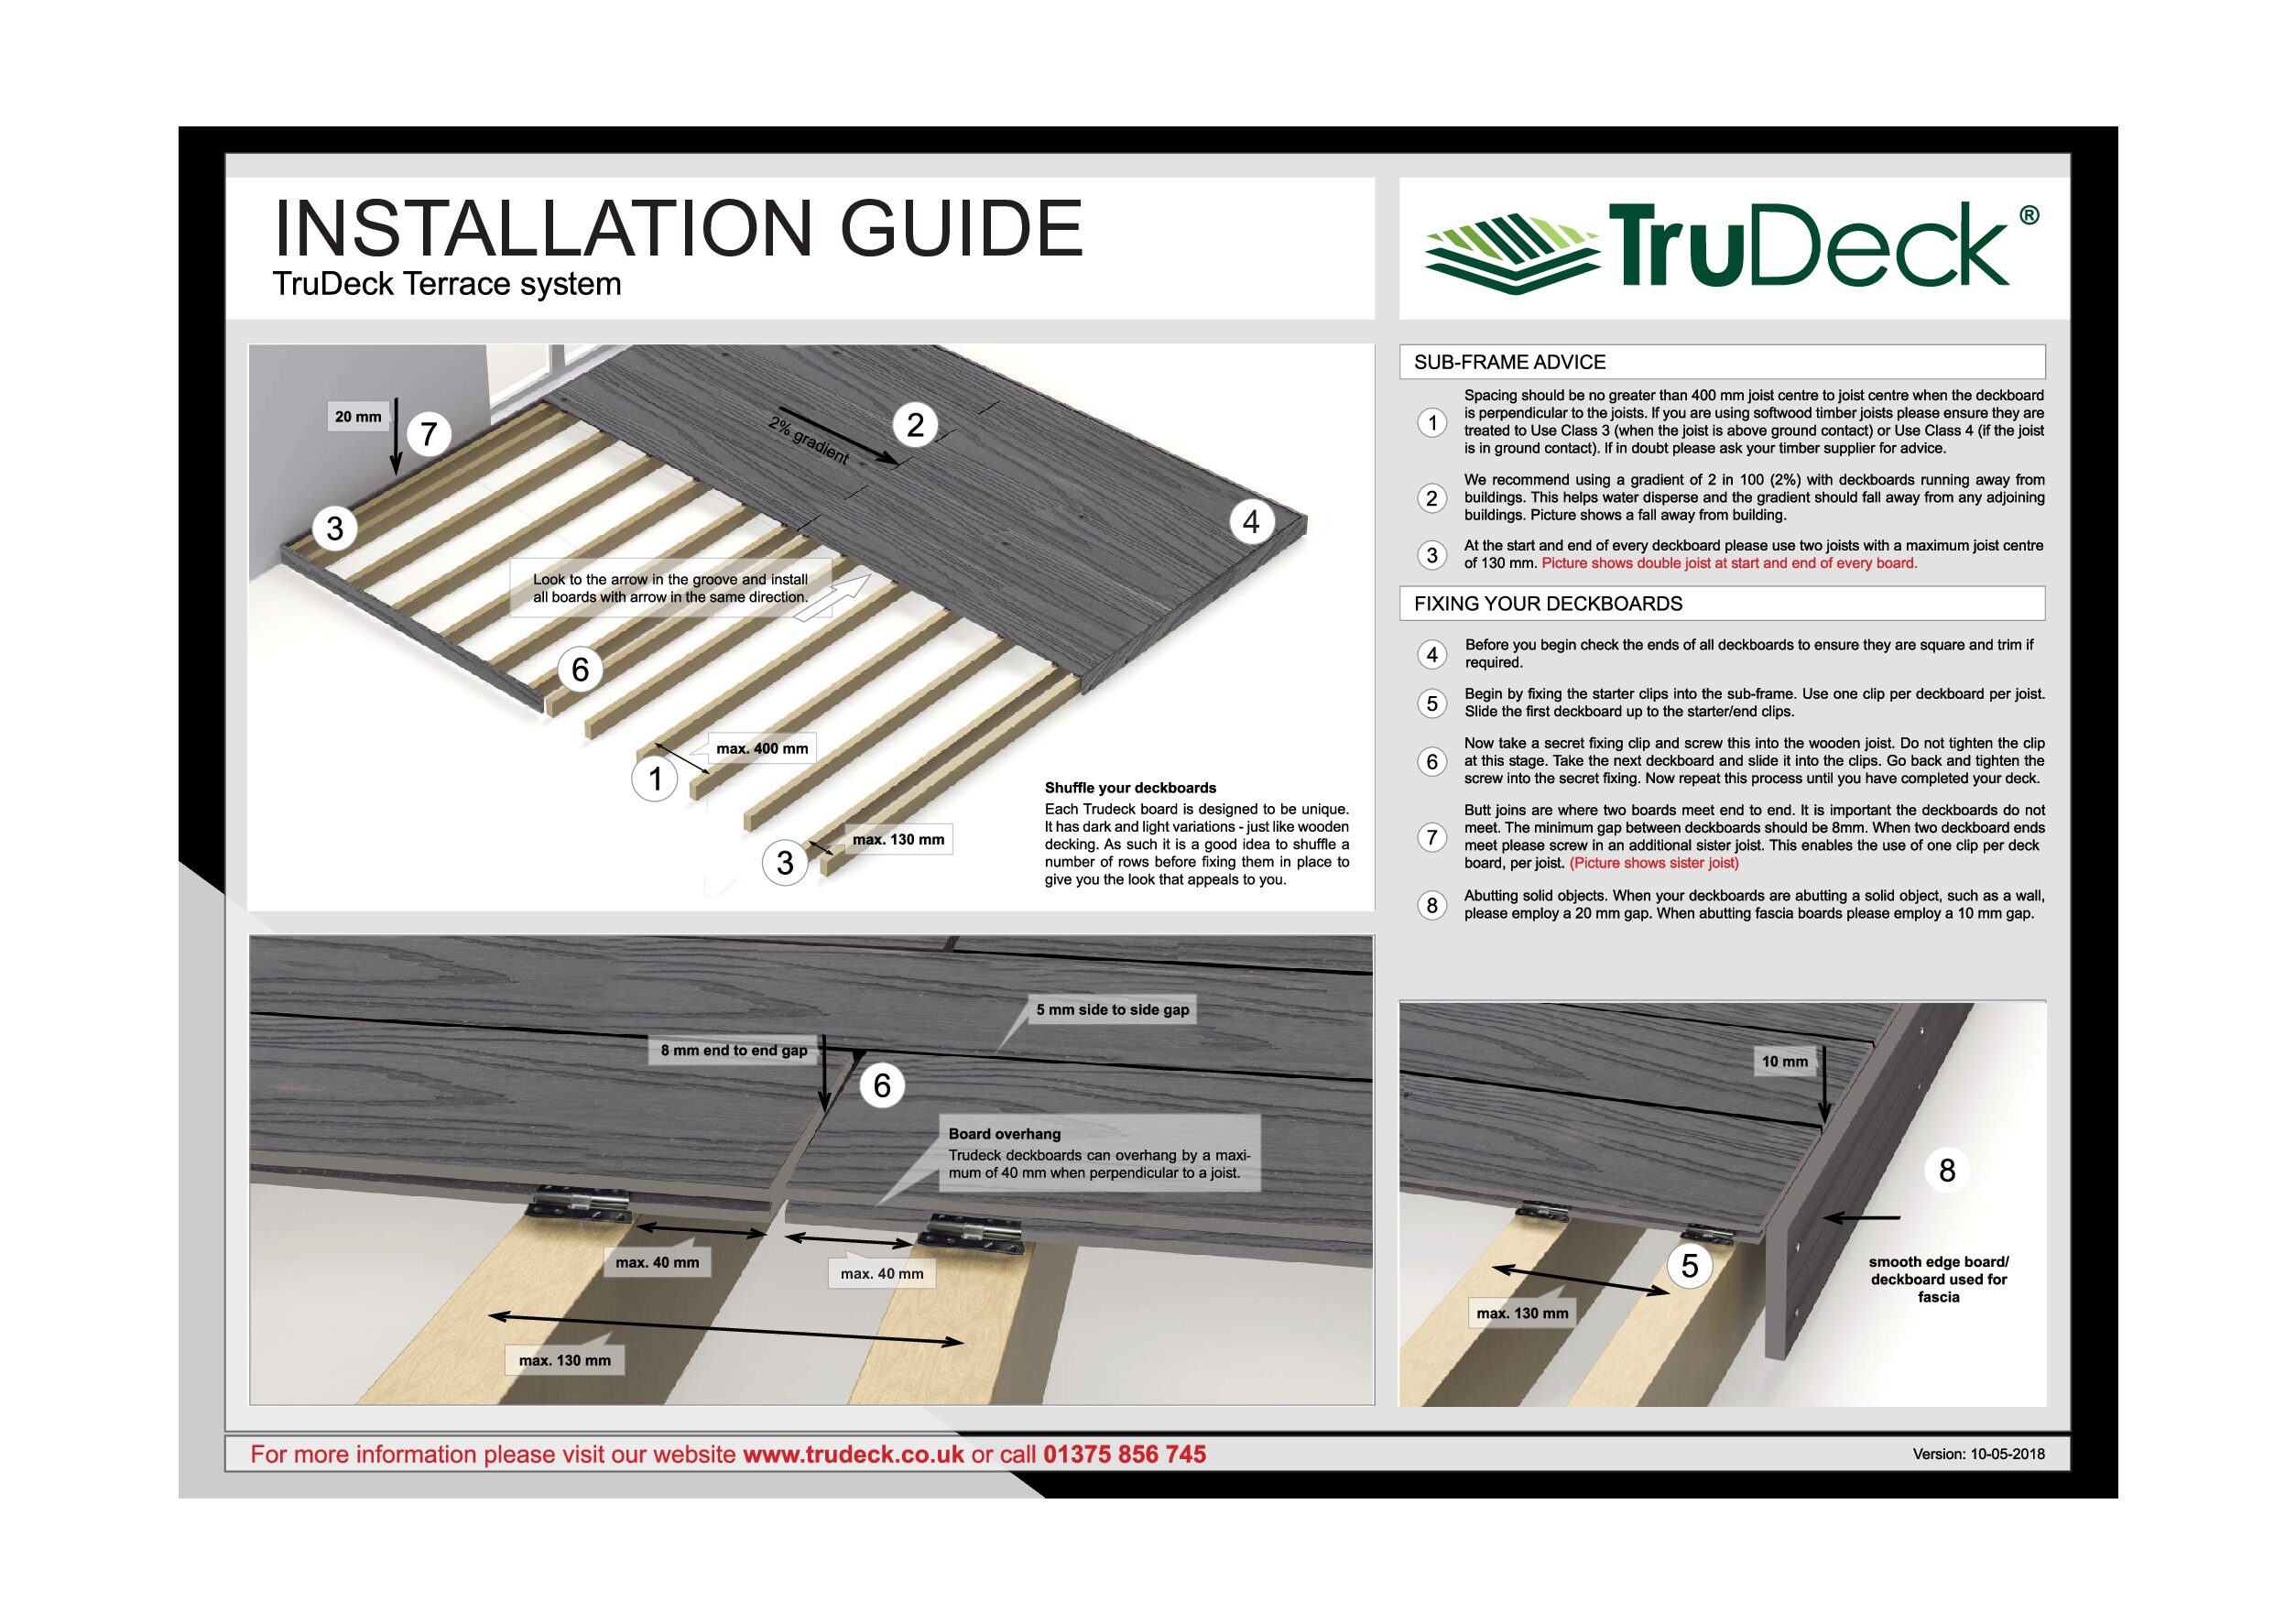 rudeck-Installation-Guide-Quick-Guide-pdf